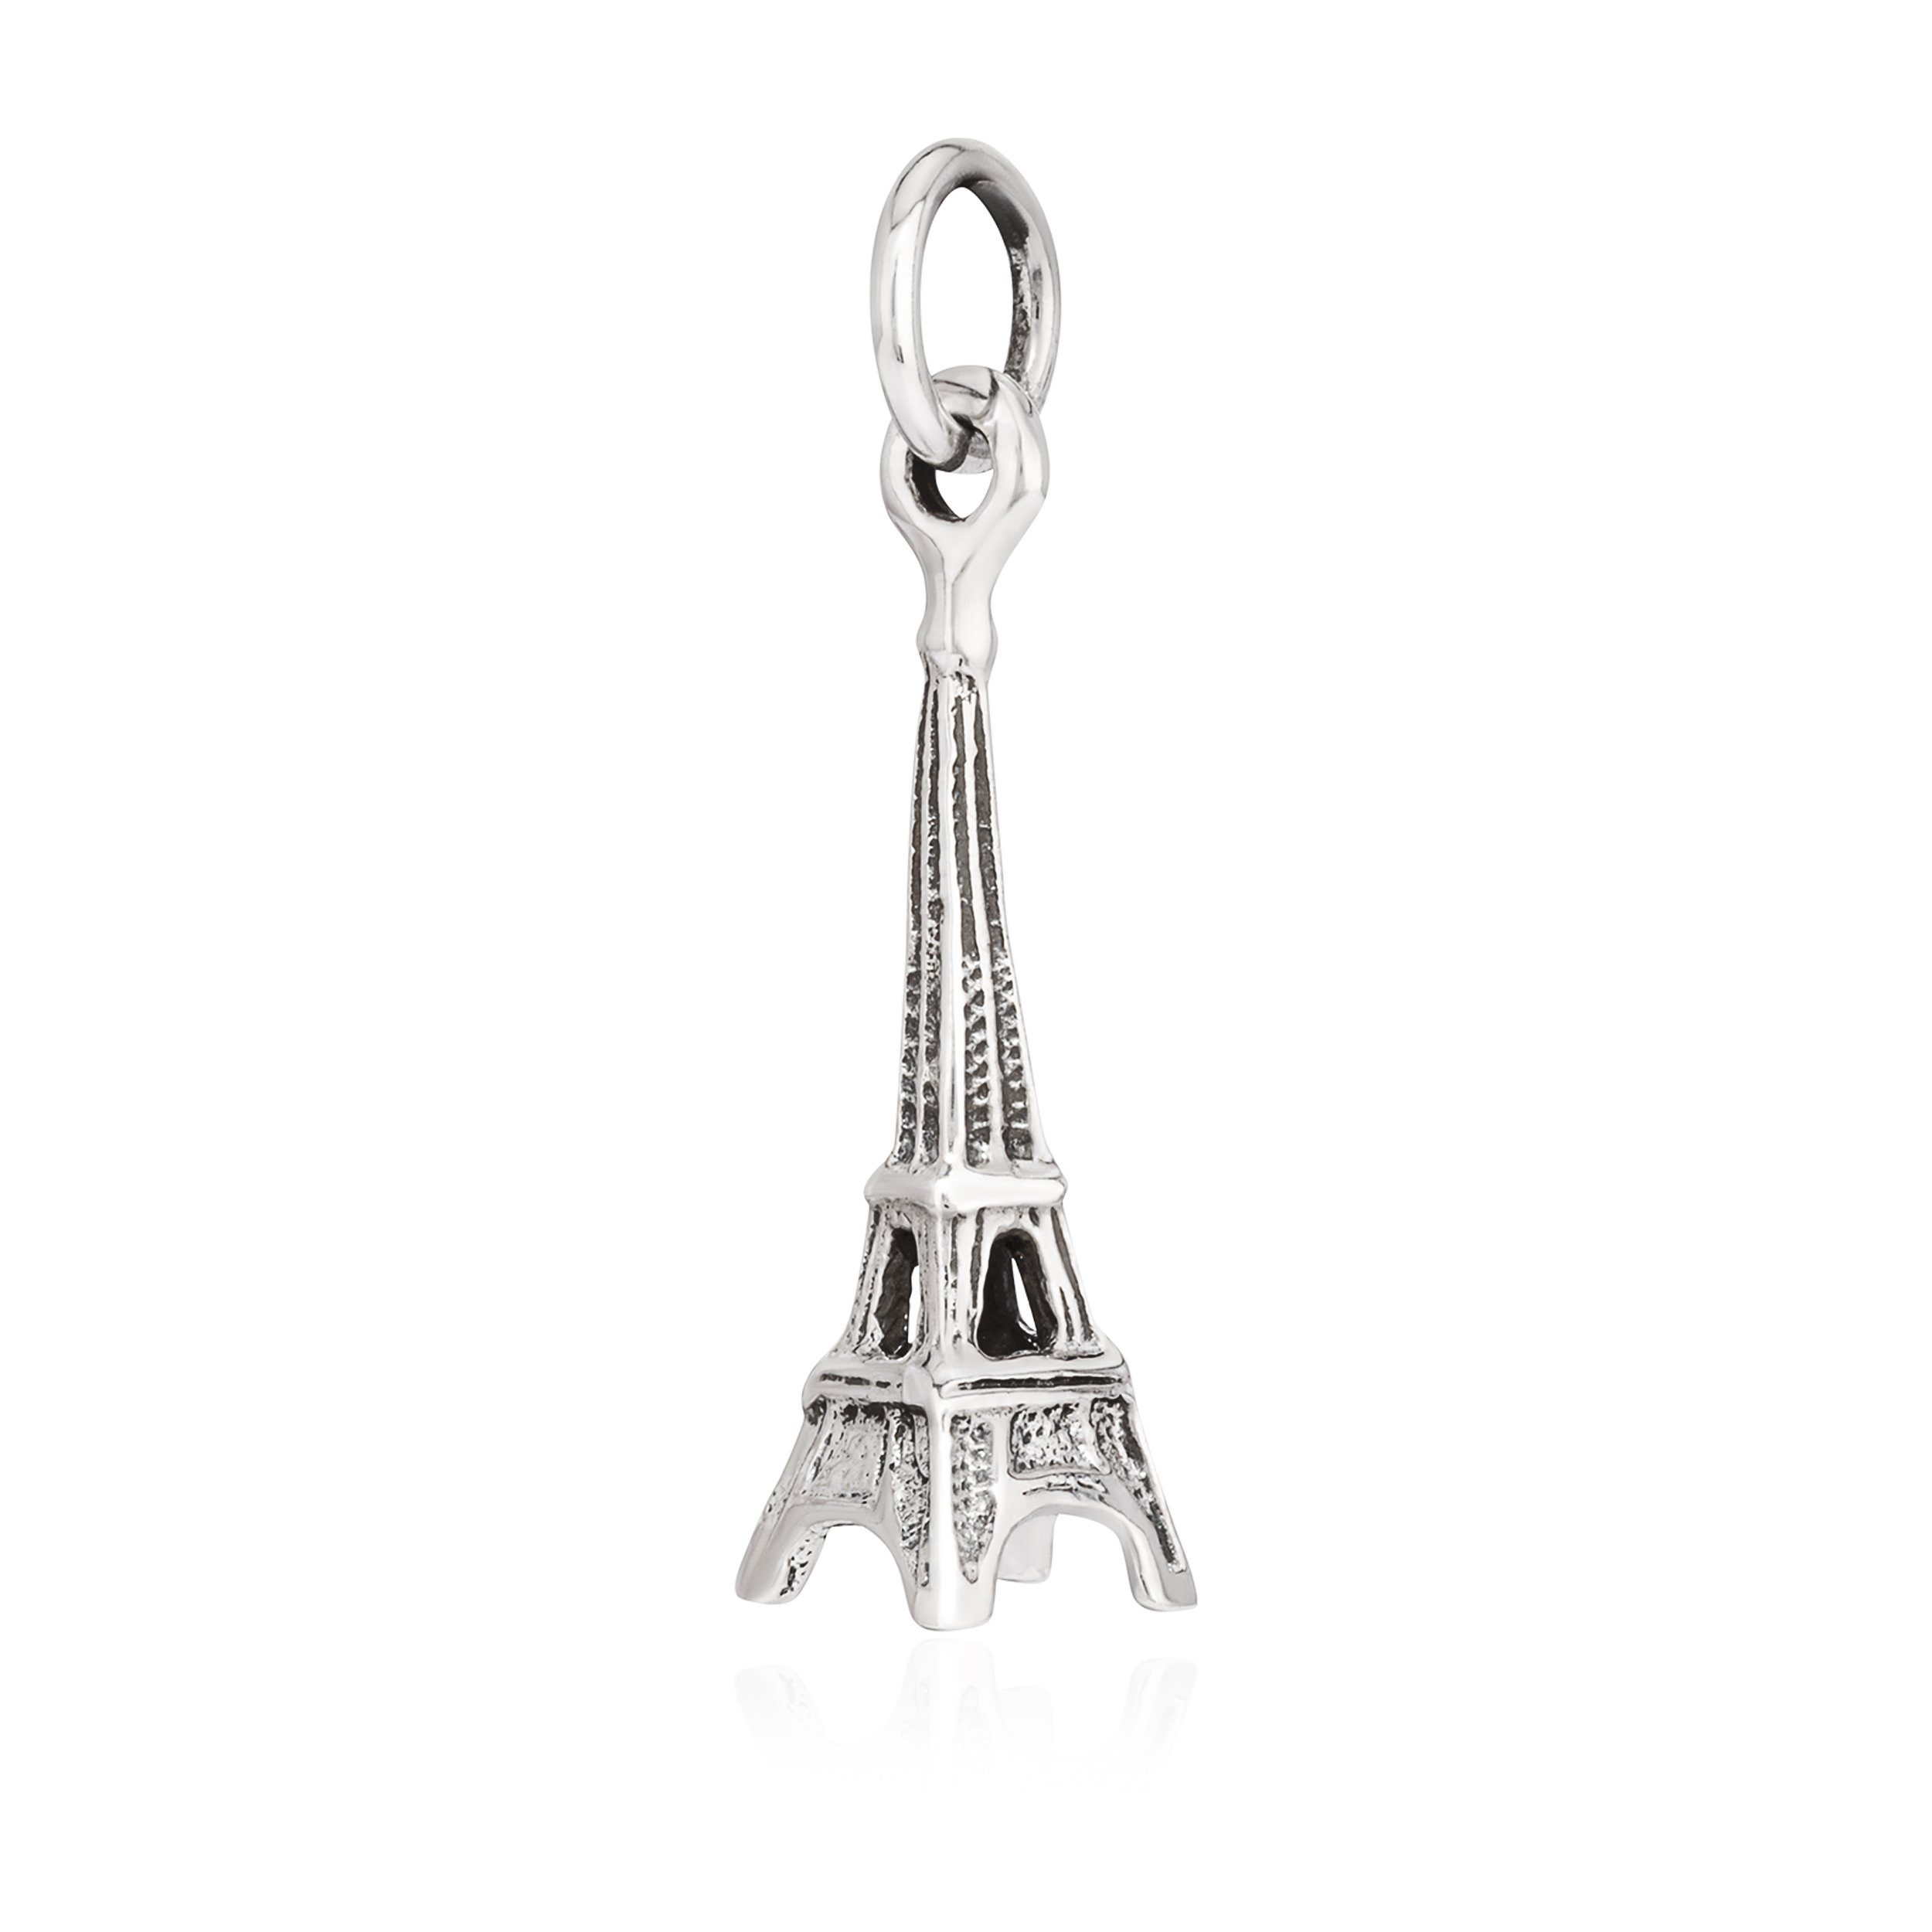 NKlaus Kettenanhänger Paris, Silber rhodiniert Eiffelturm 925 Silber 21x7mm Kettenanhänger 925